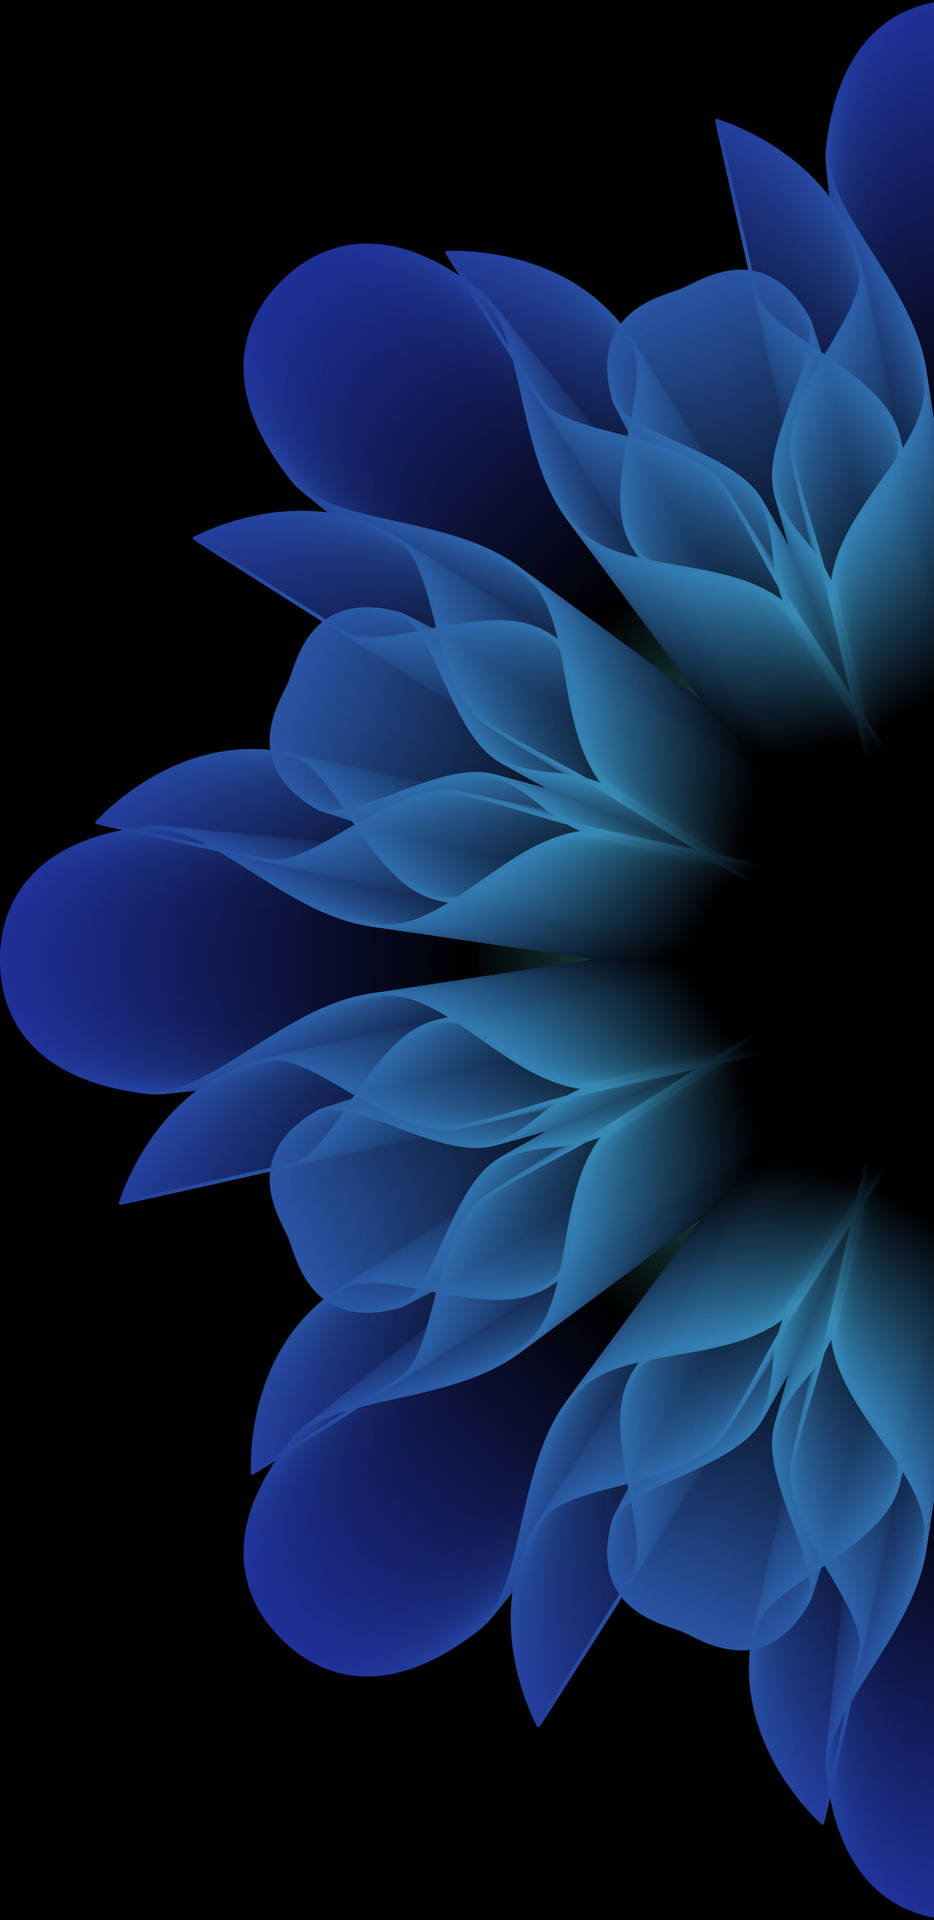 Iphone Xr Red Neon Blue Flower Wallpaper